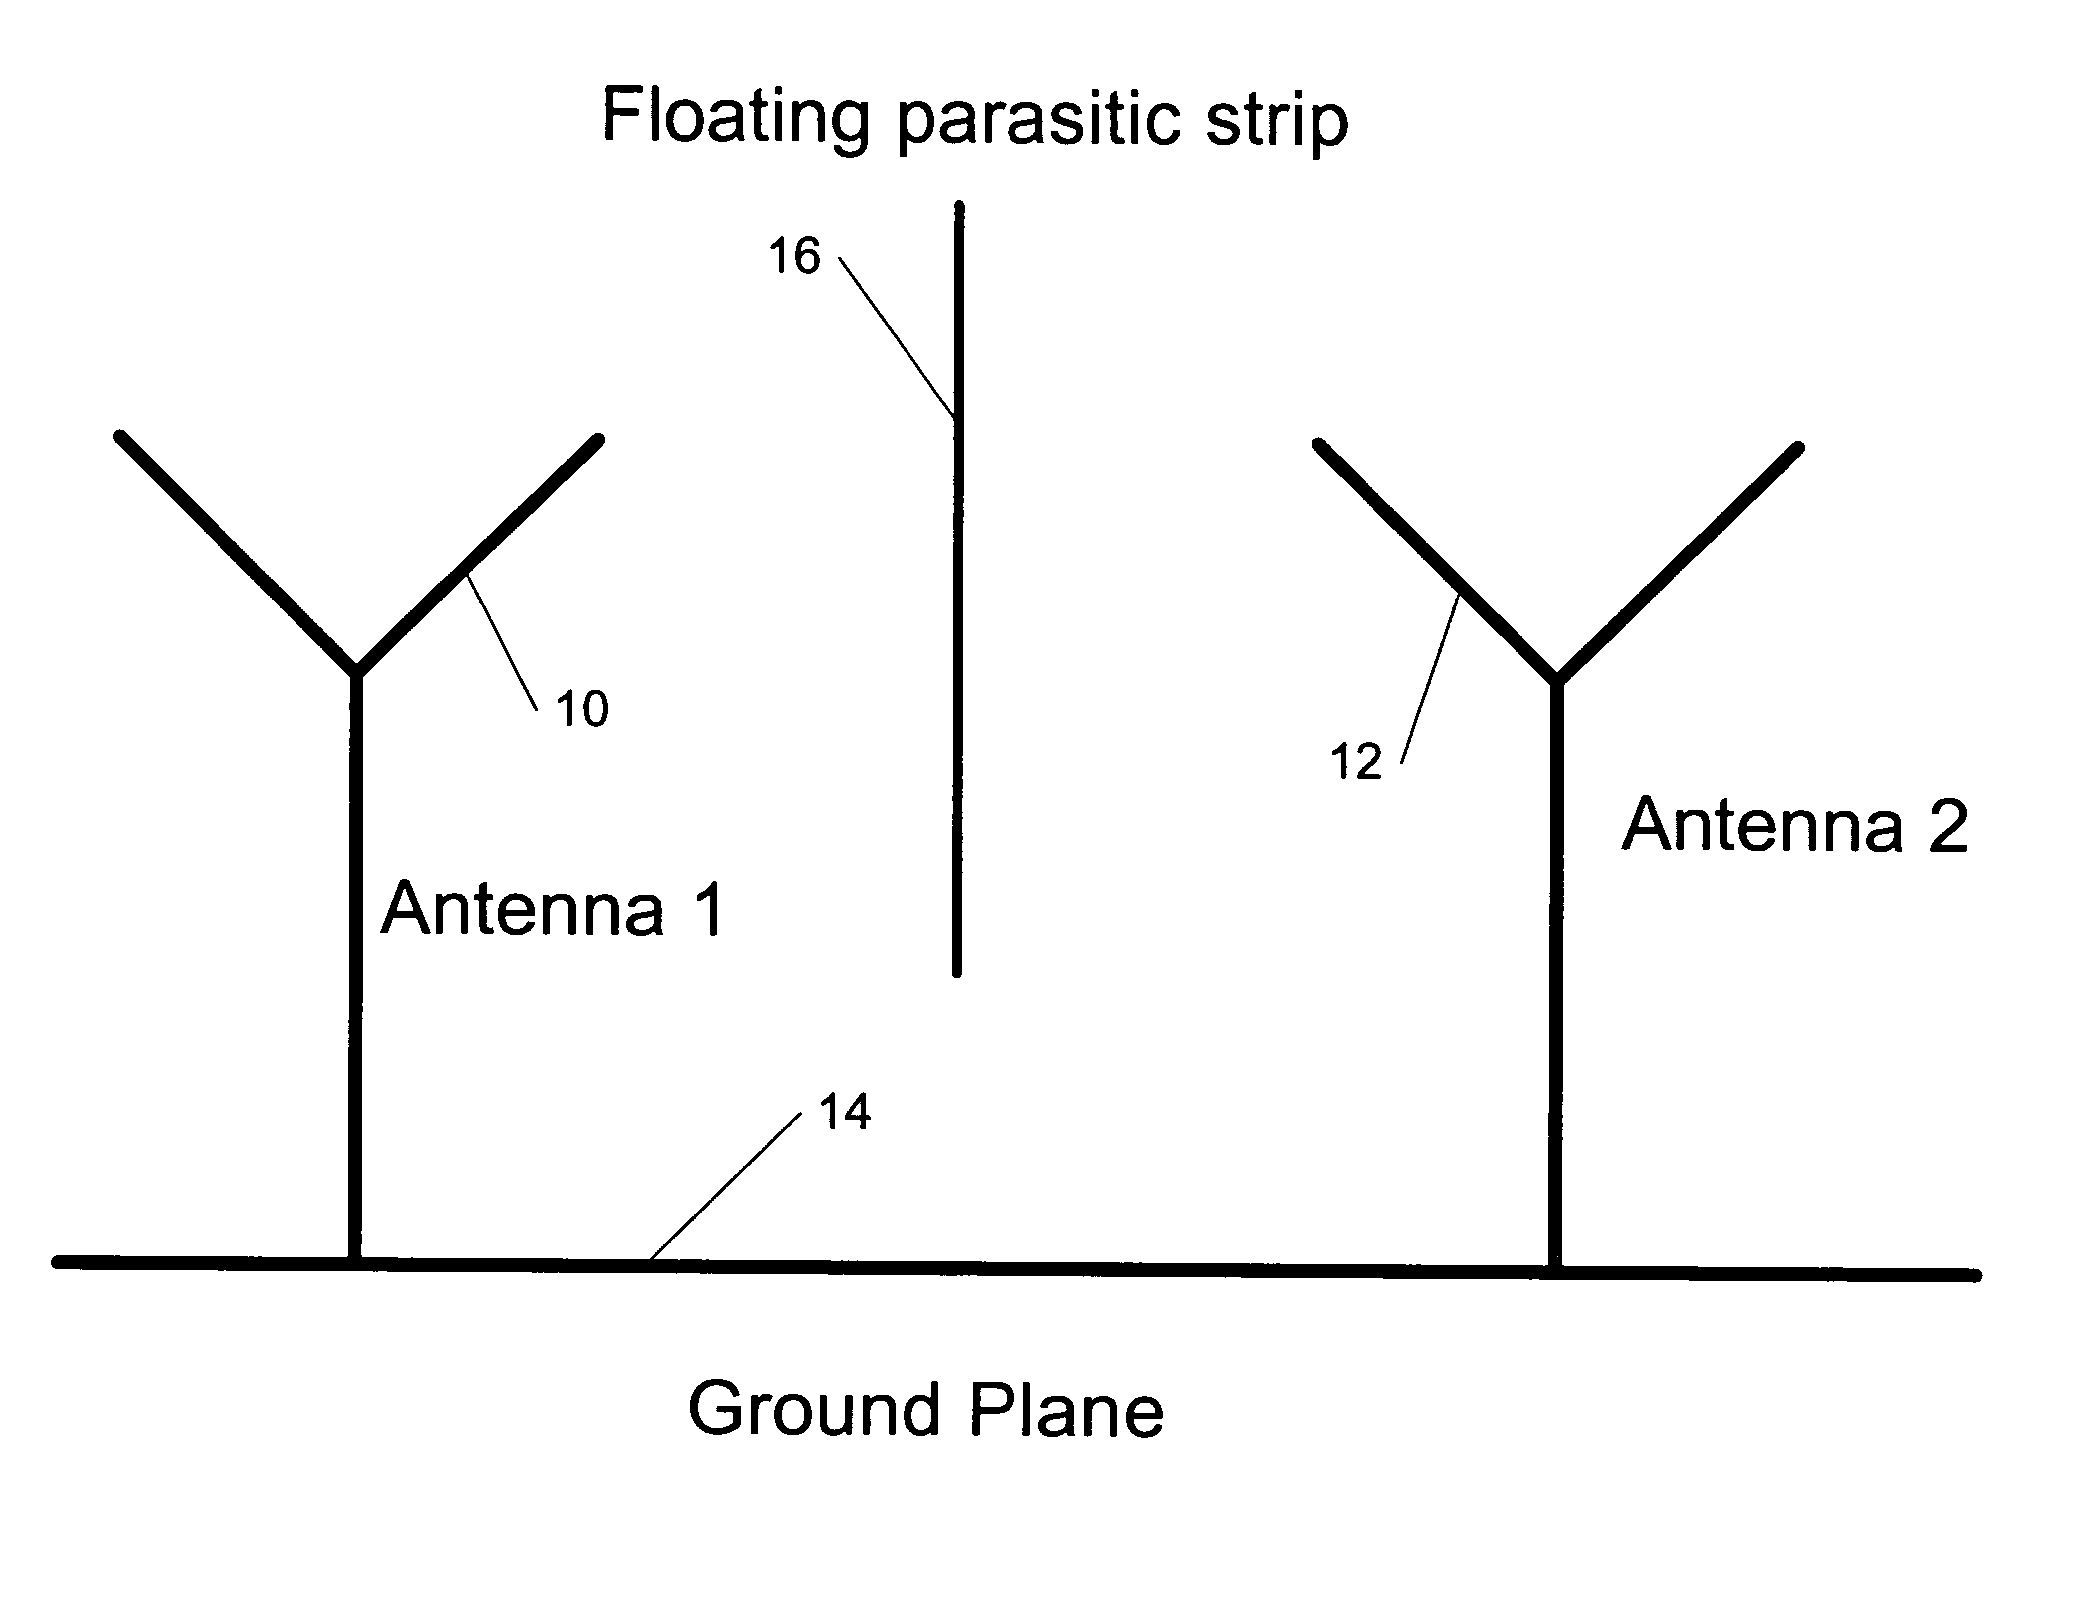 Isolation between antennas using floating parasitic elements